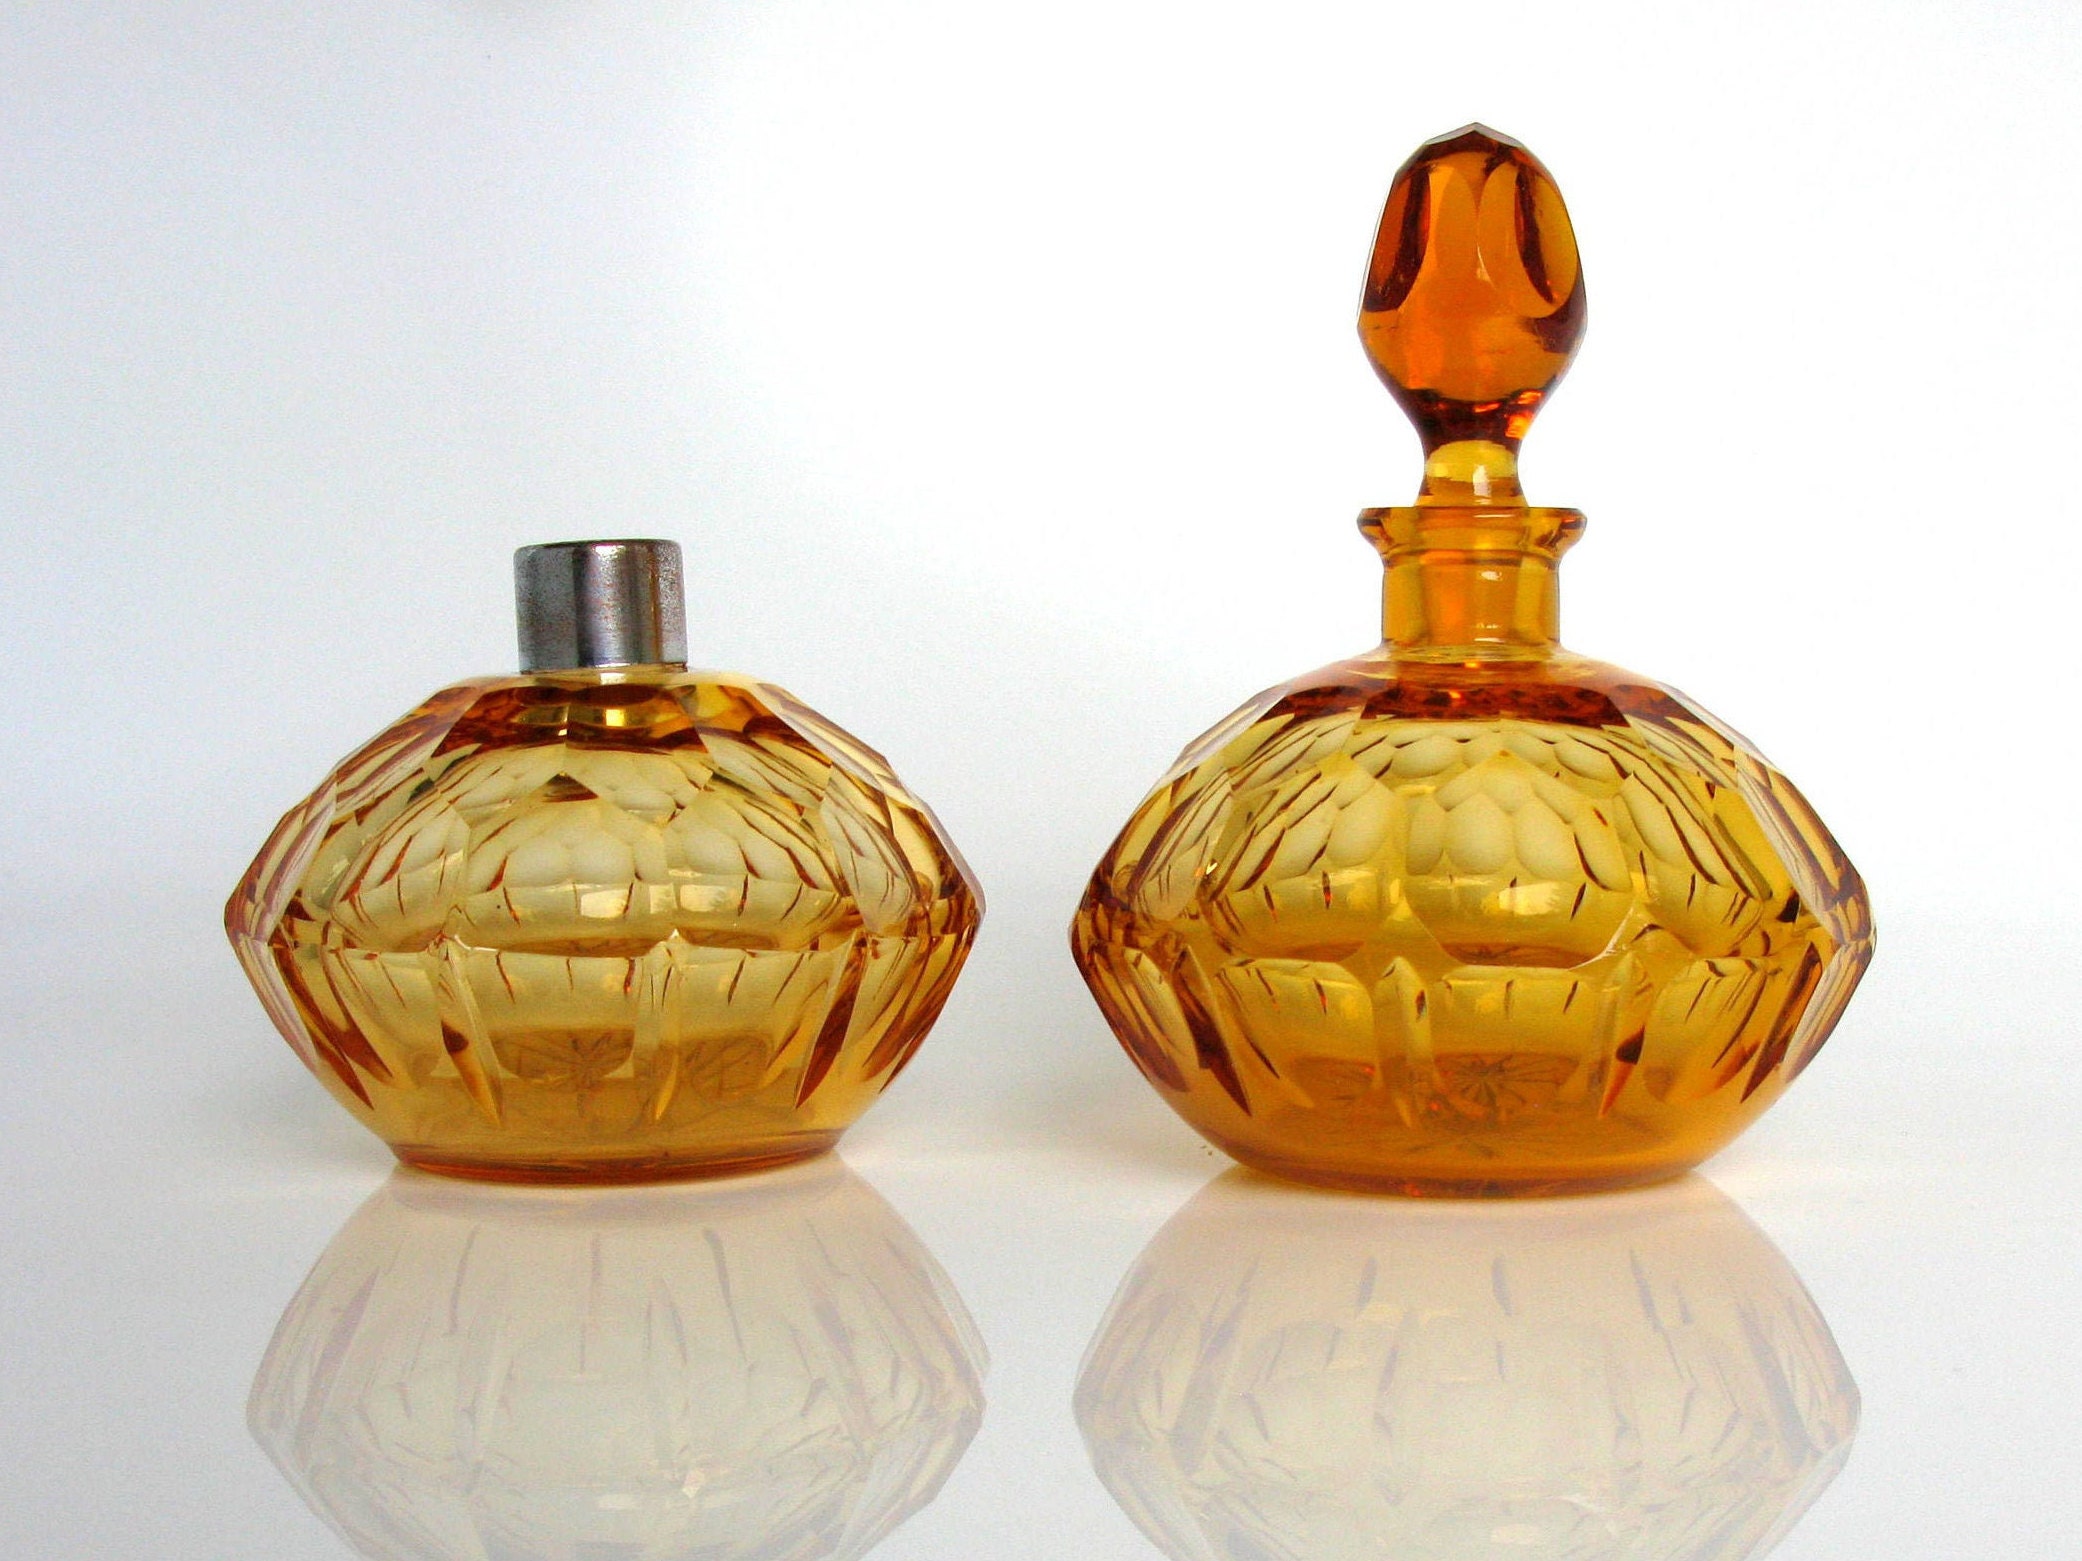 Czech Art Deco Perfume Bottles & Atomizers, 4 Auction